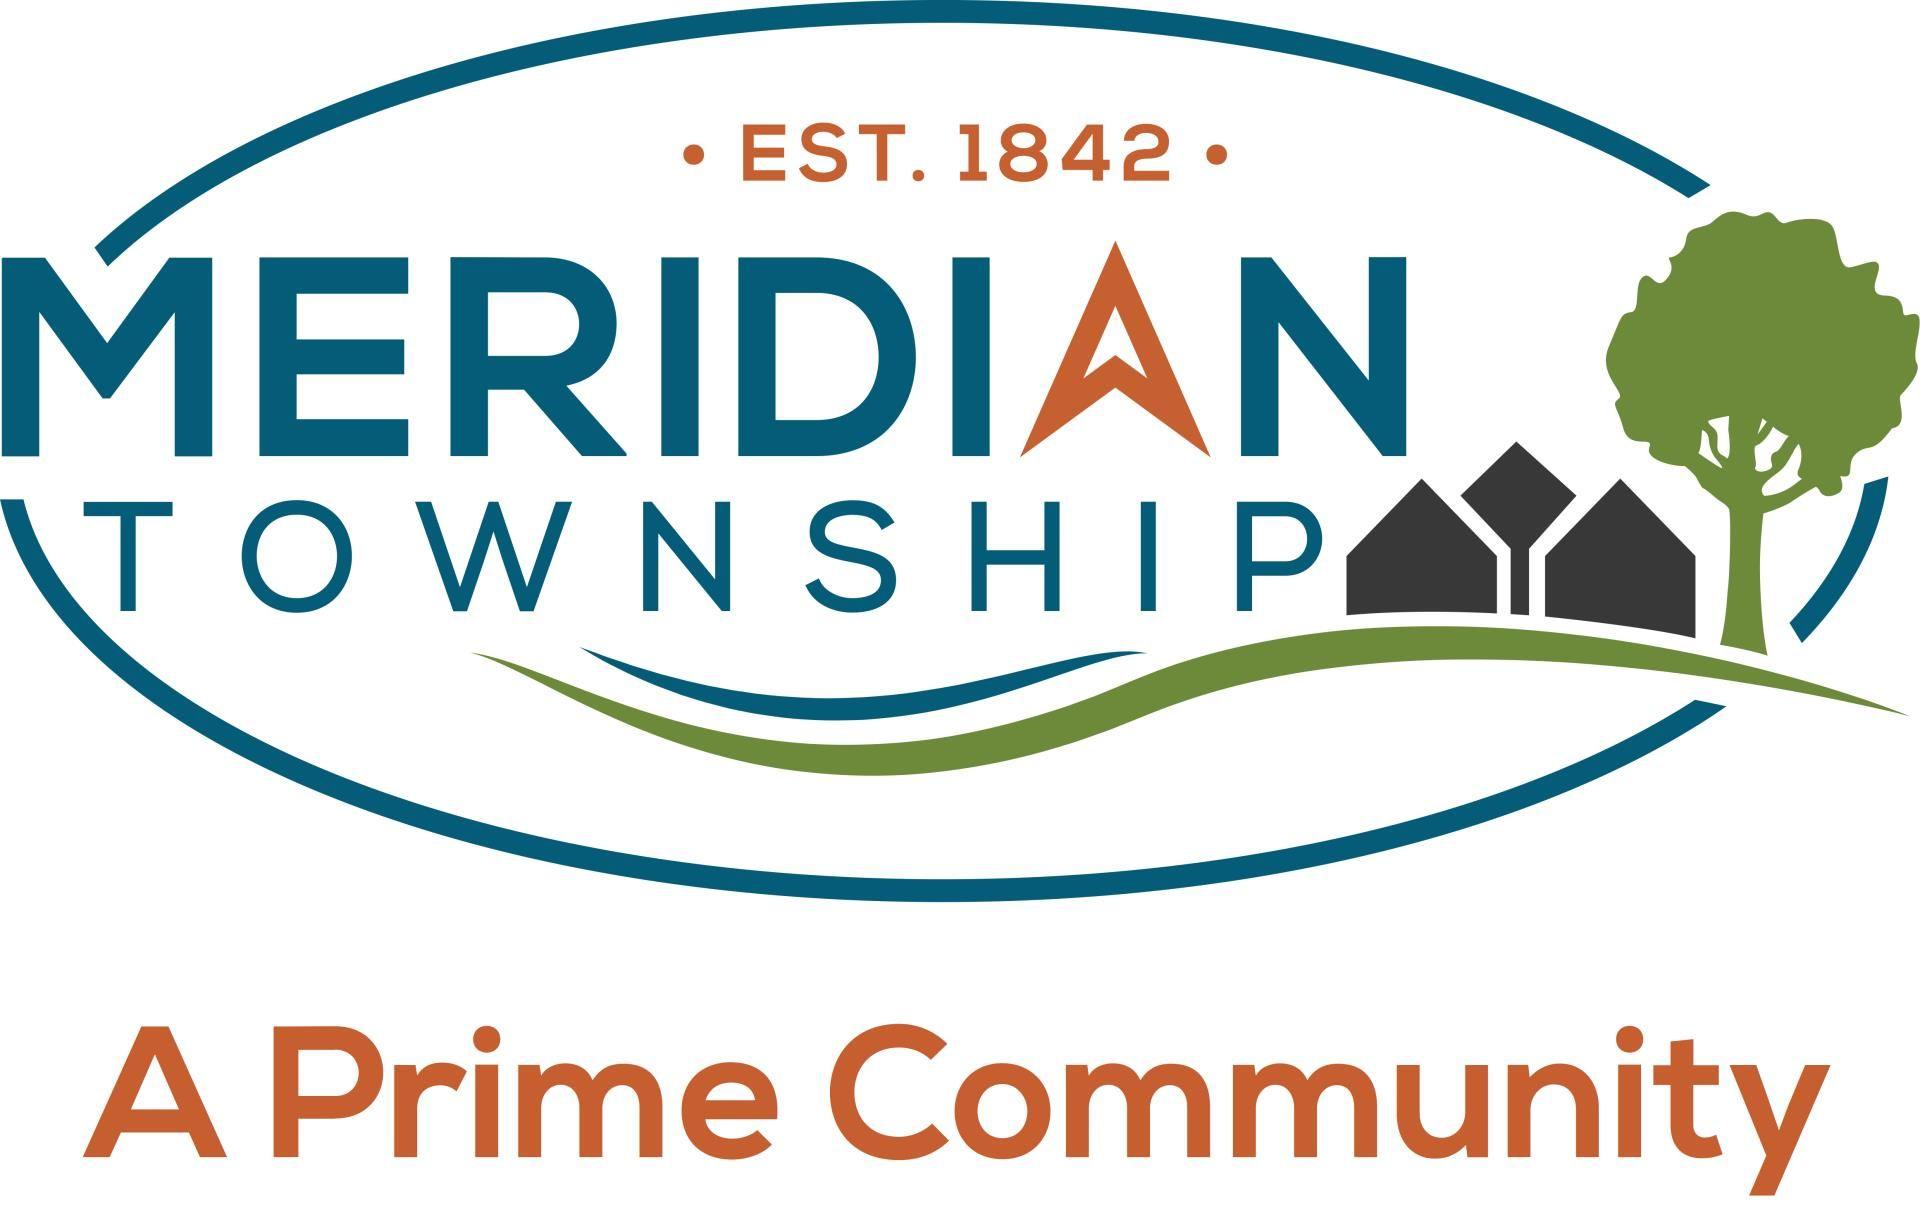 Township Logo - About the Township. Meridian Township, MI